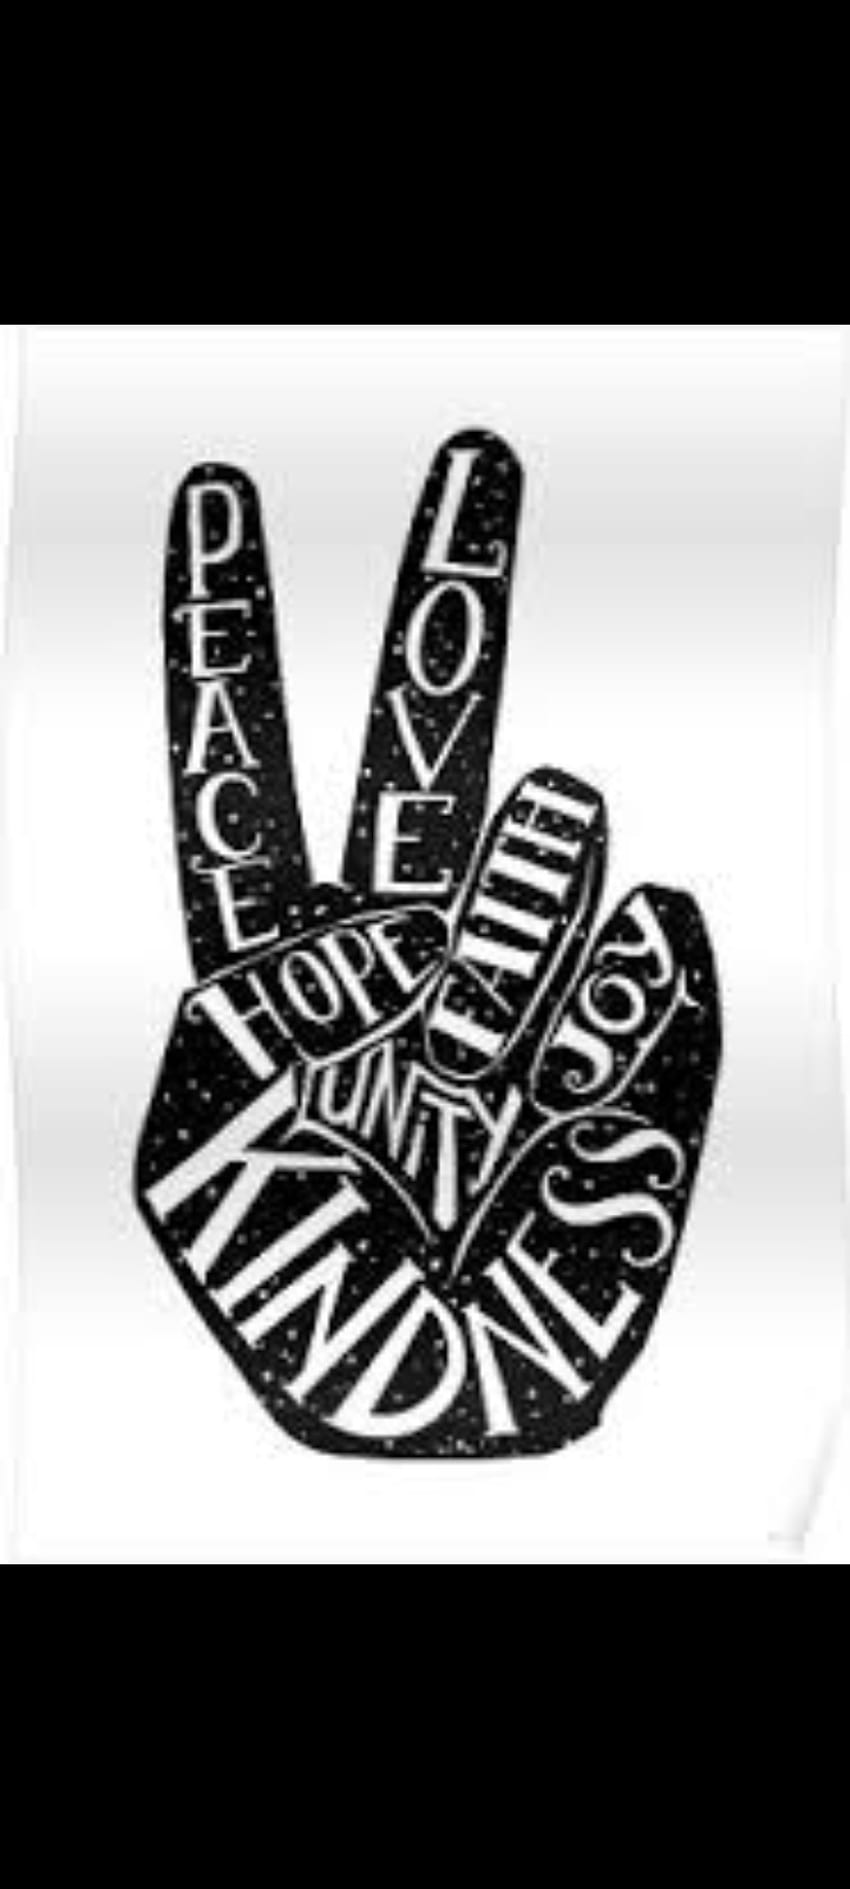 Paz amor bondad, blanco, negro, signo, mano. fondo de pantalla del teléfono